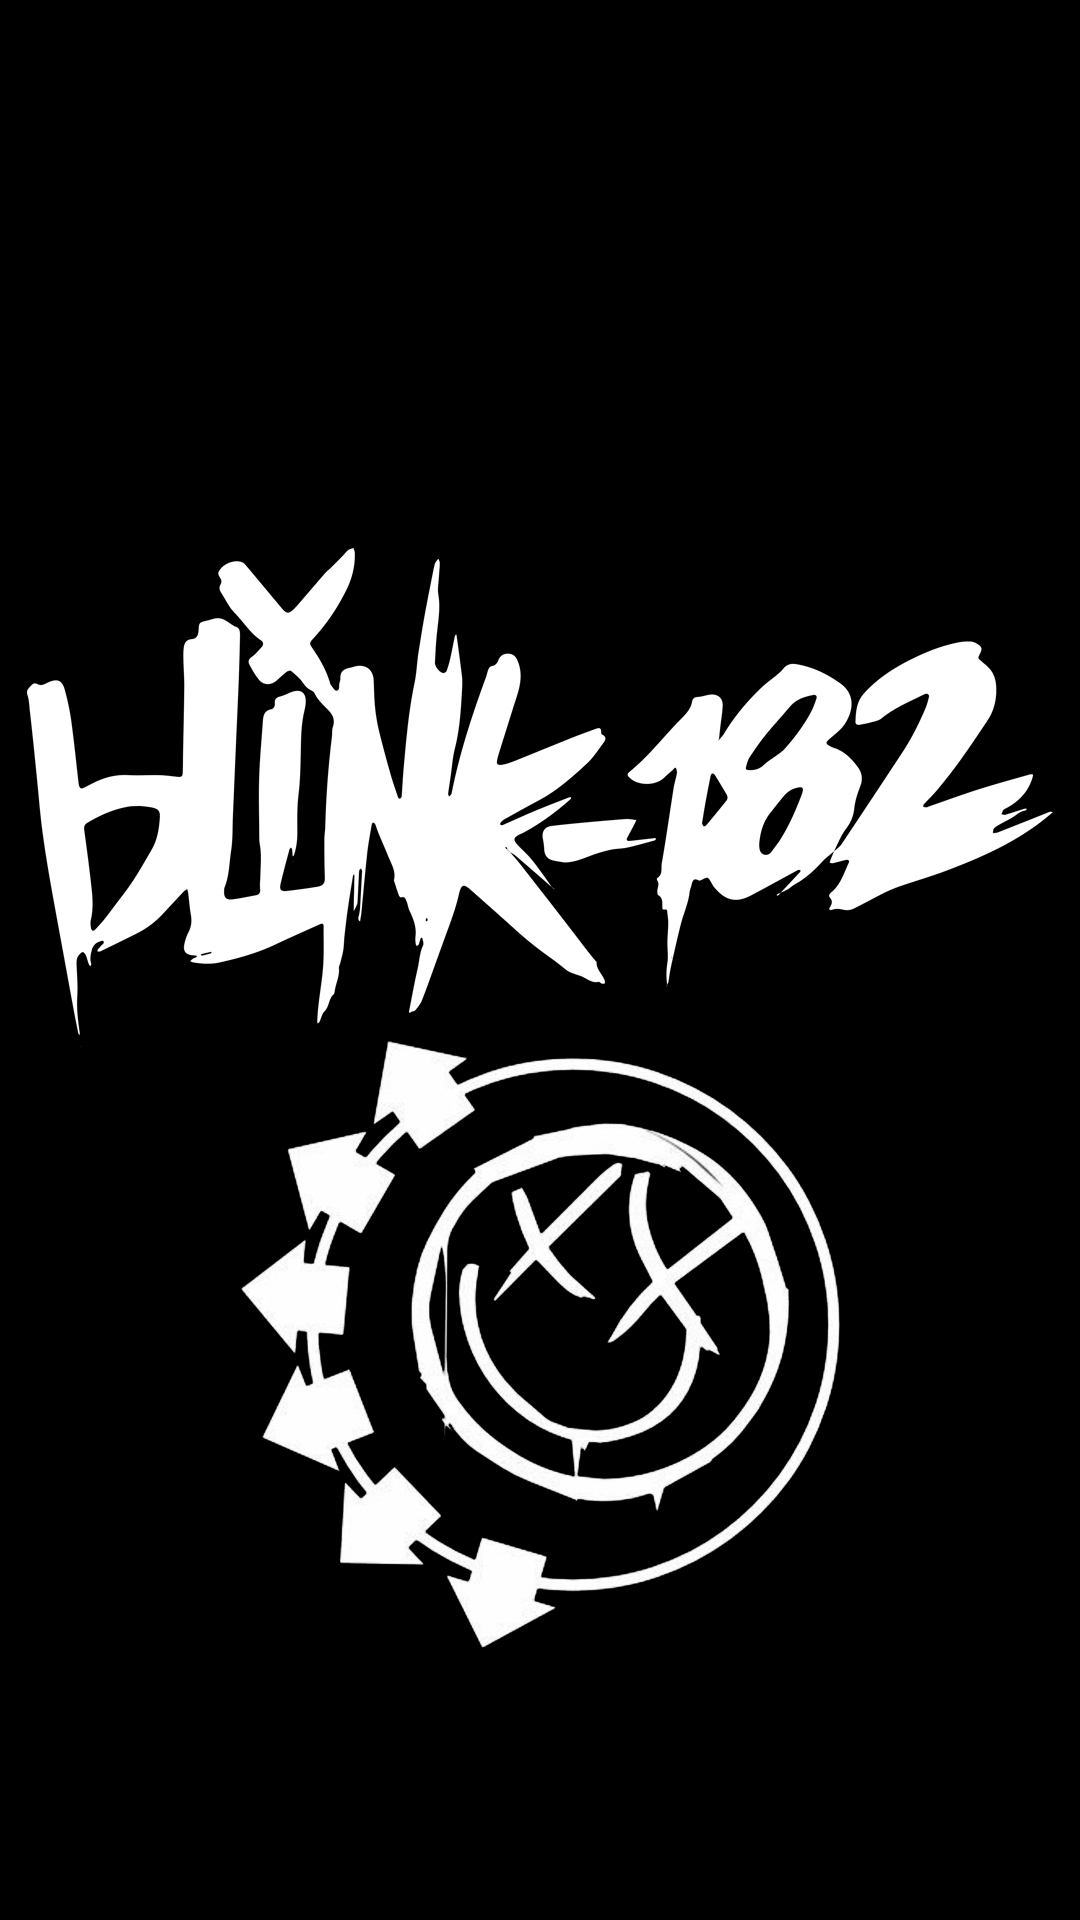 Blink 182 Iphone Wallpapers